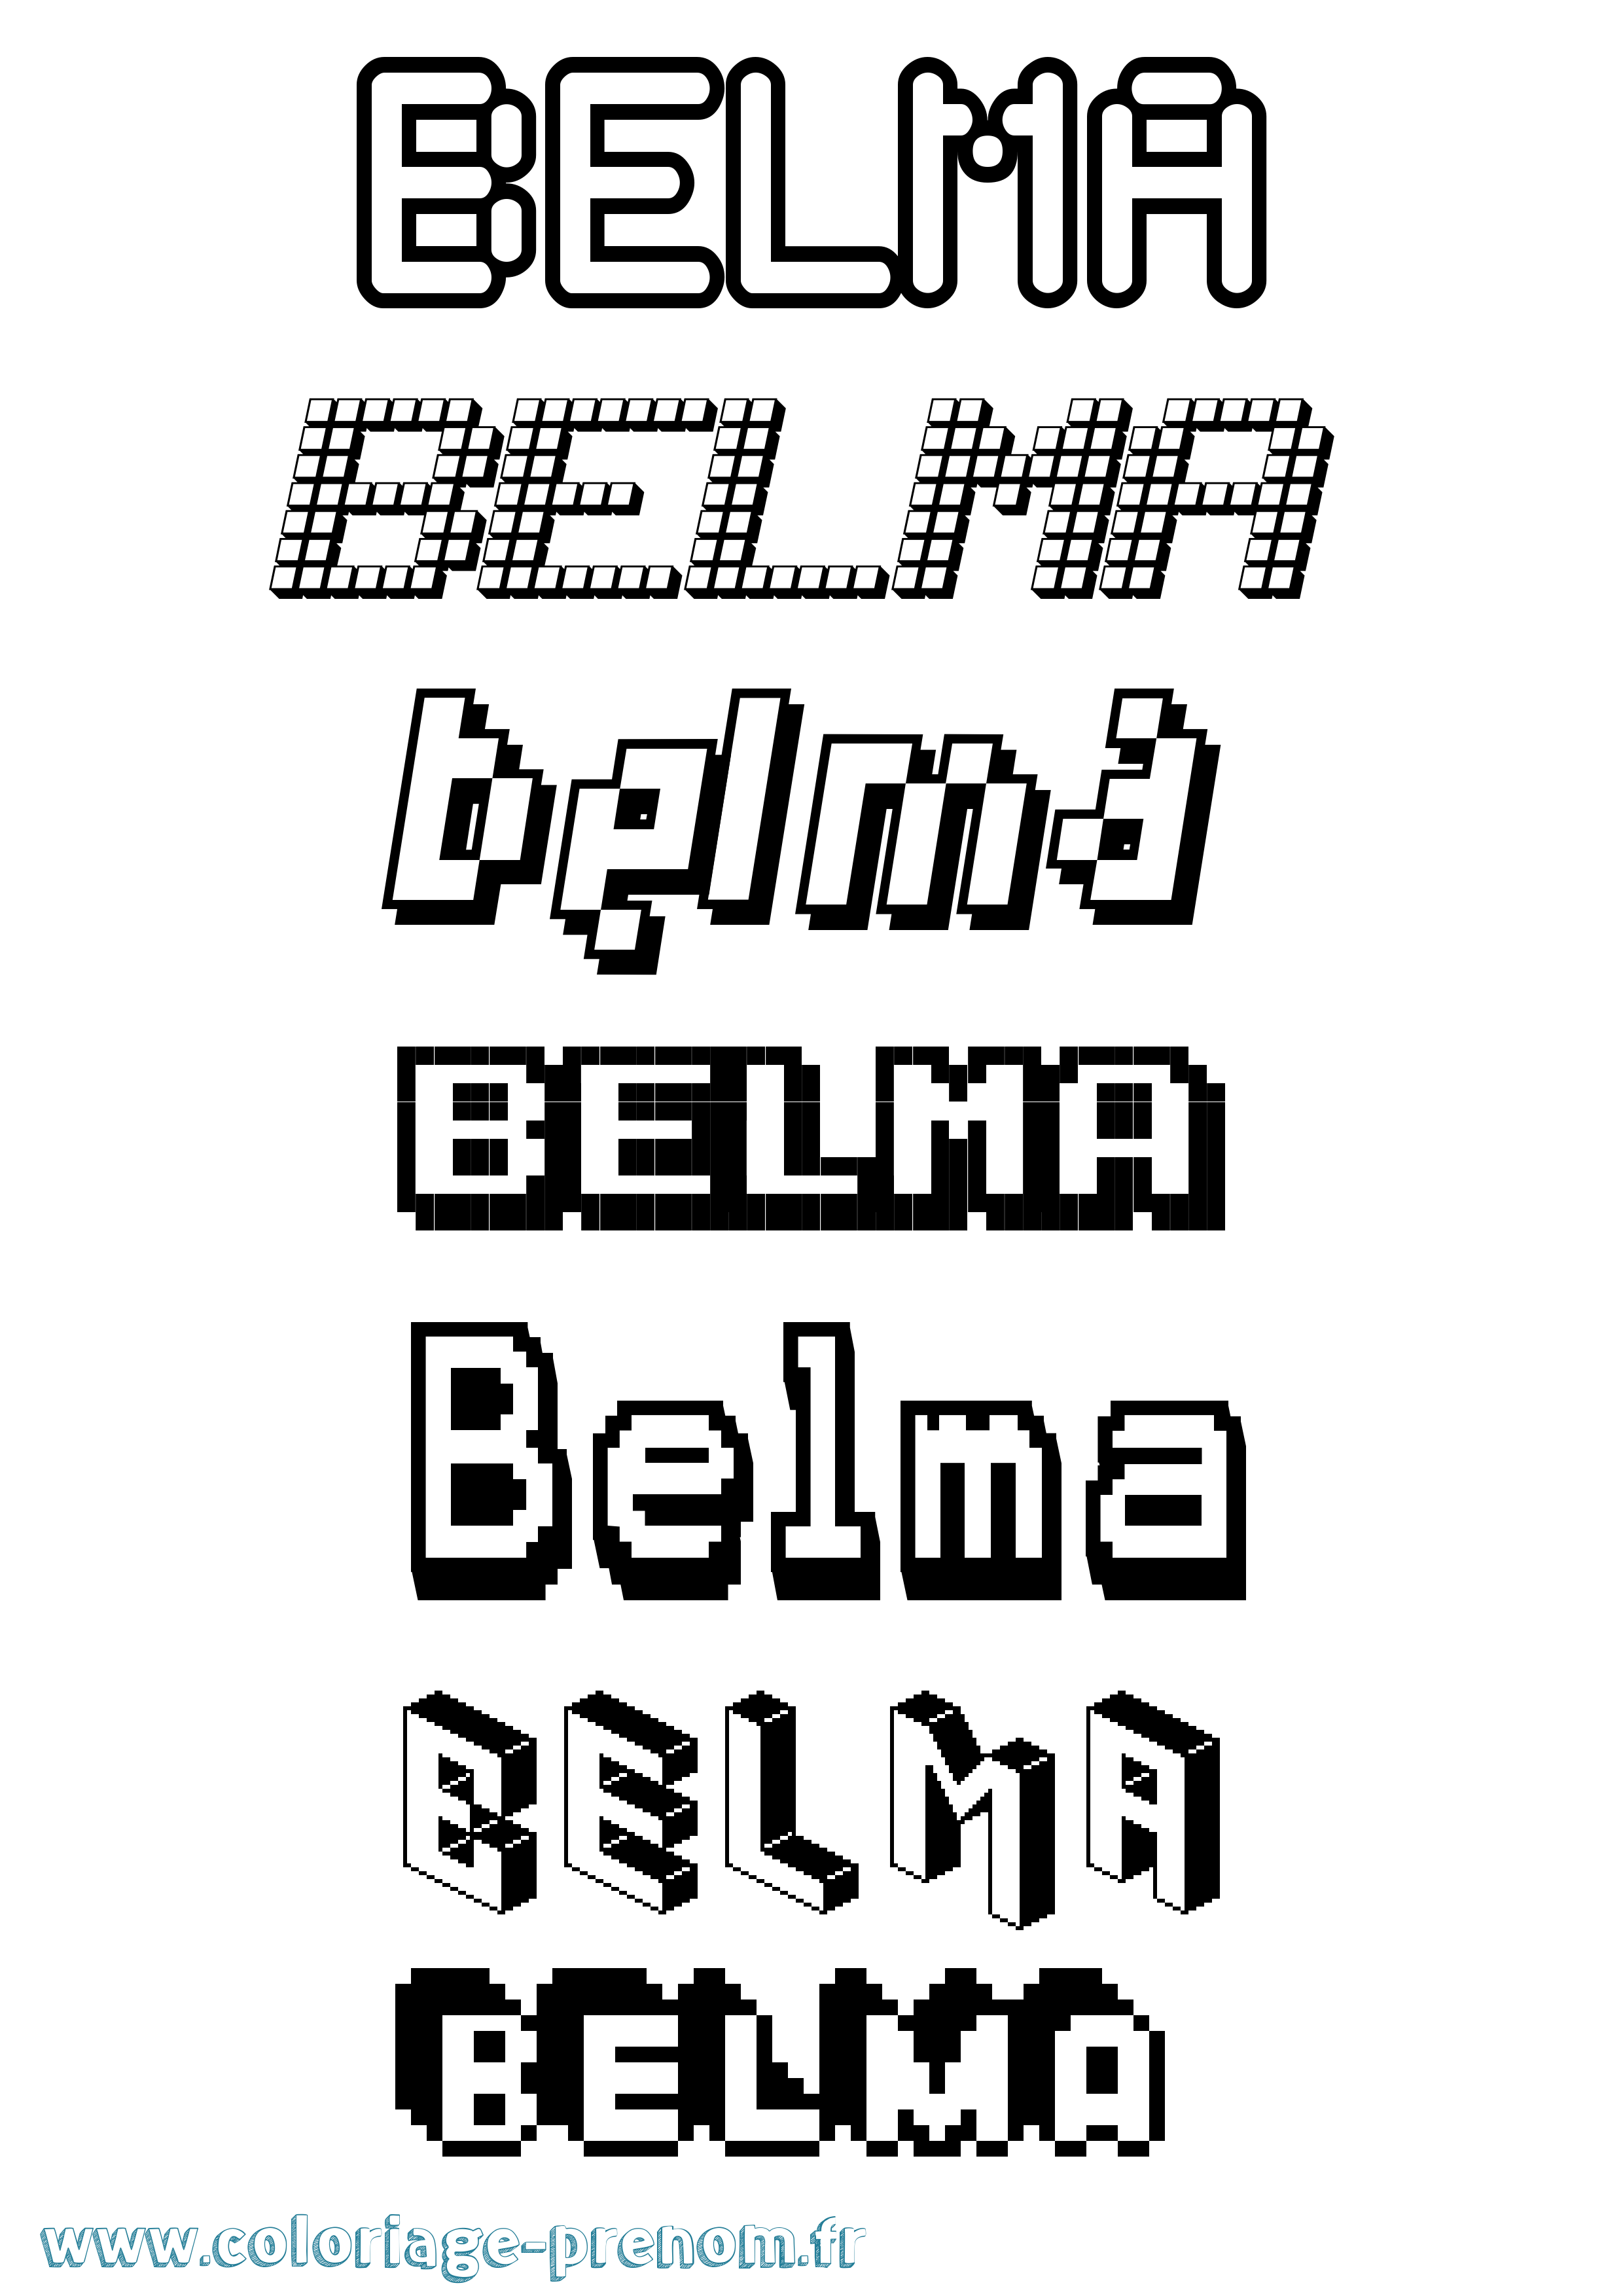 Coloriage prénom Belma Pixel